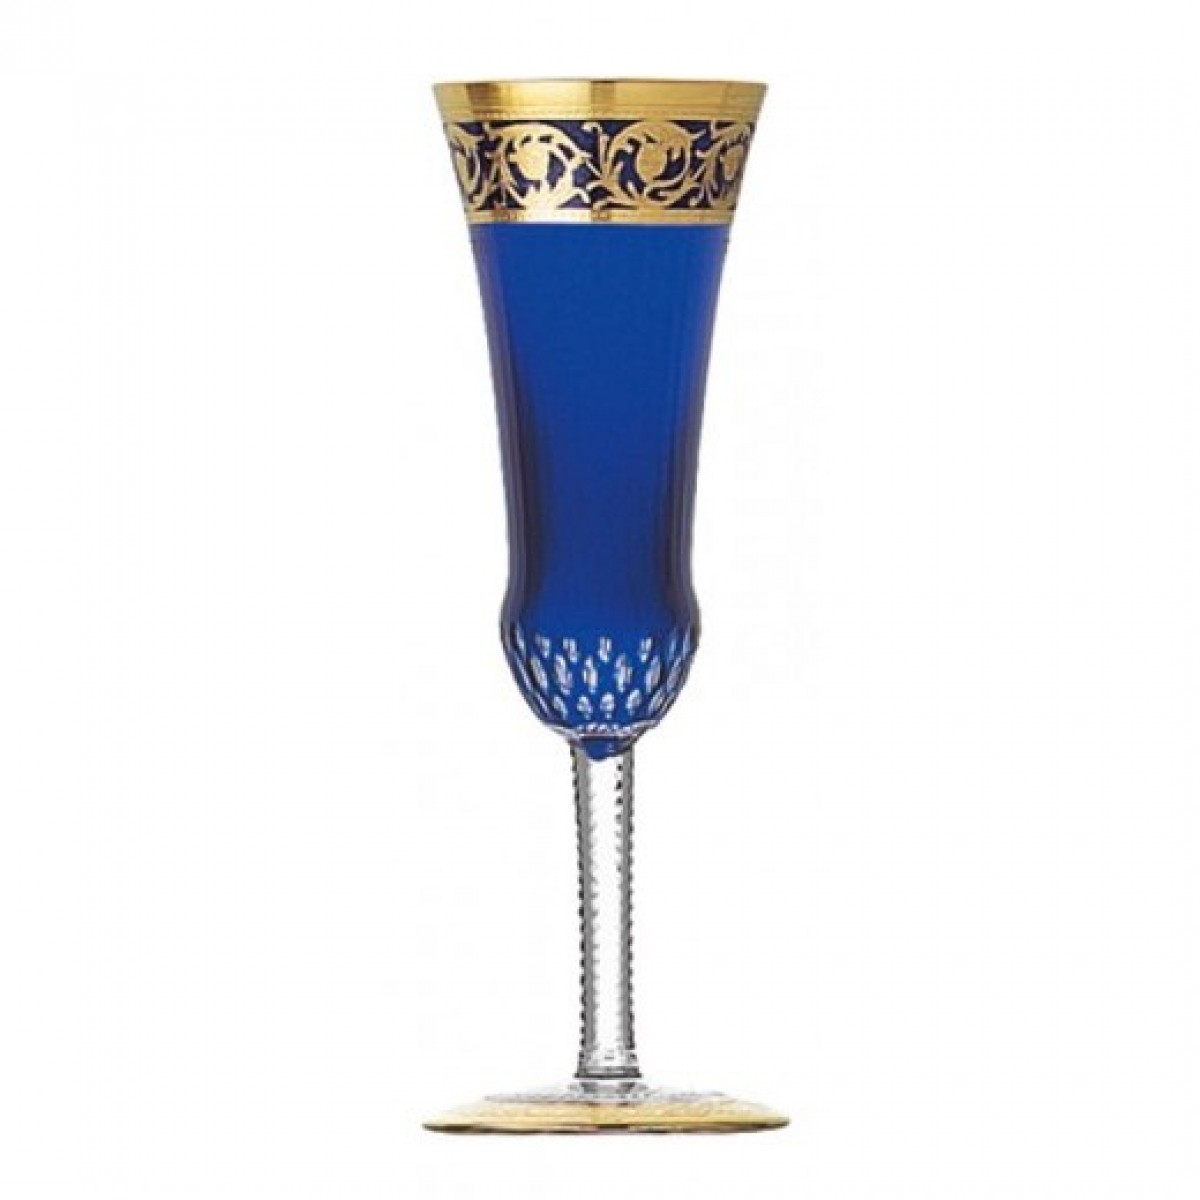 Thistle Champagne Flute Gold Engraving - Dark Blue | Highlight image